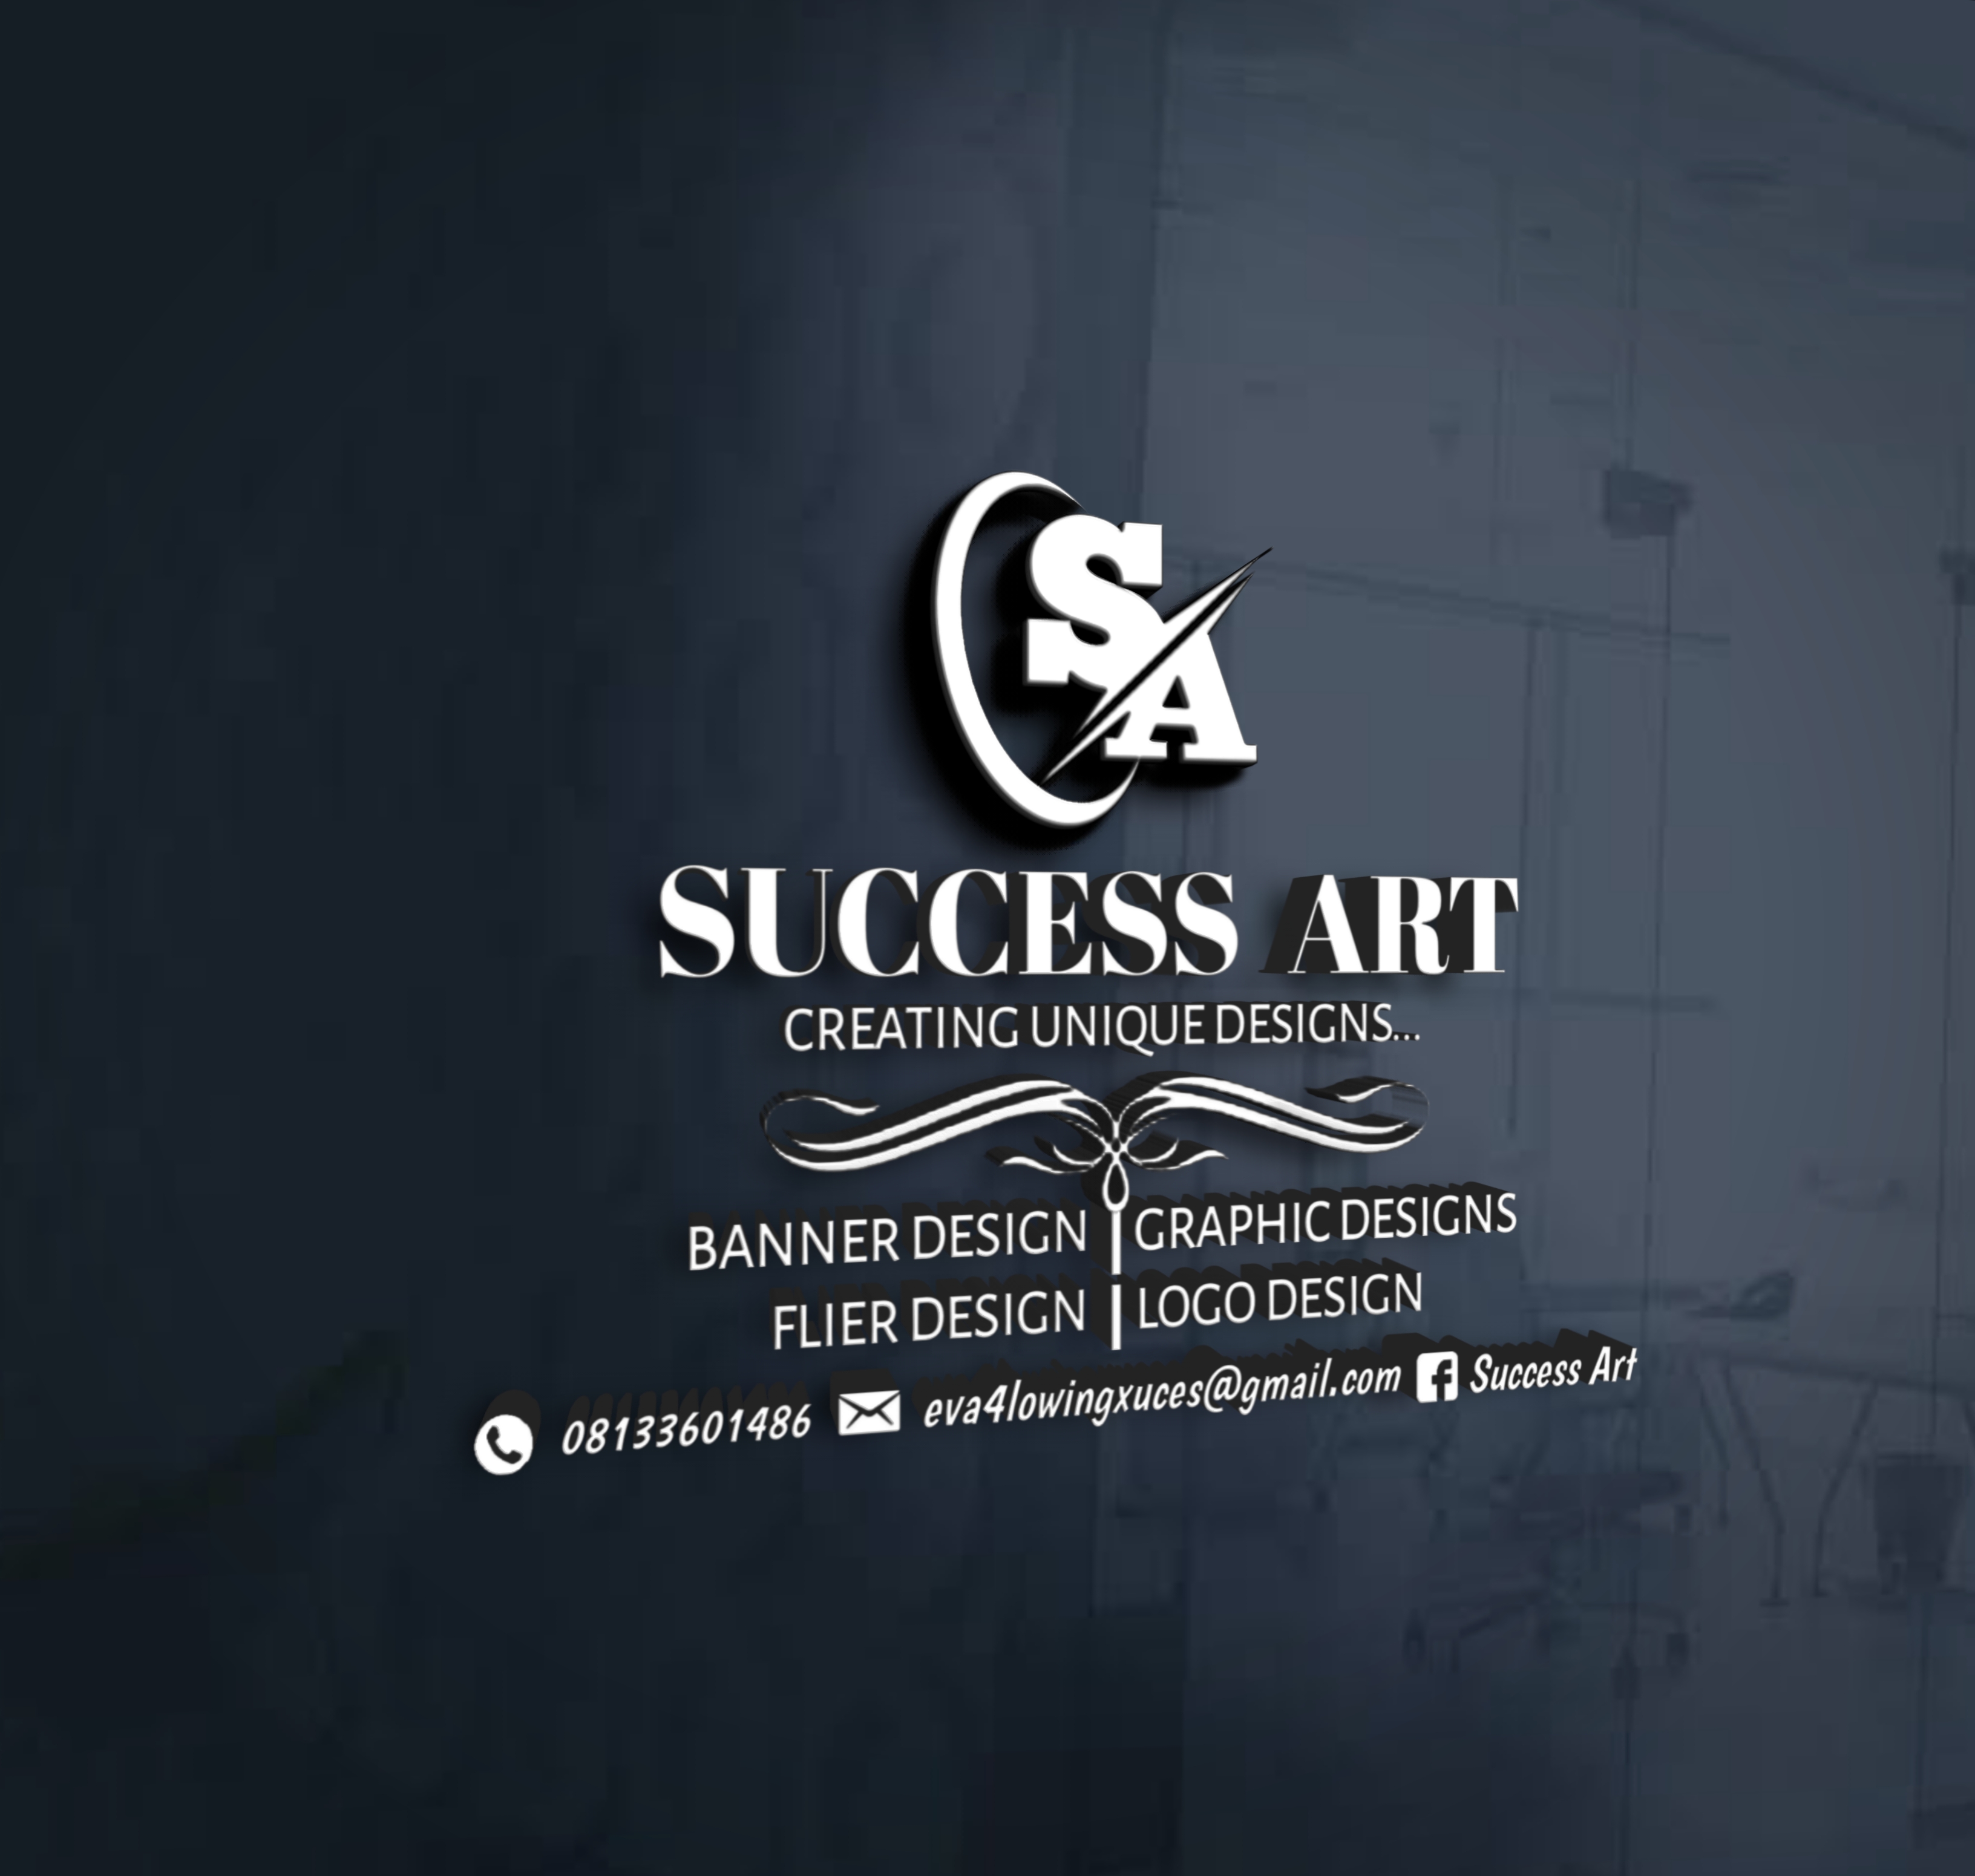 Success Arts provider